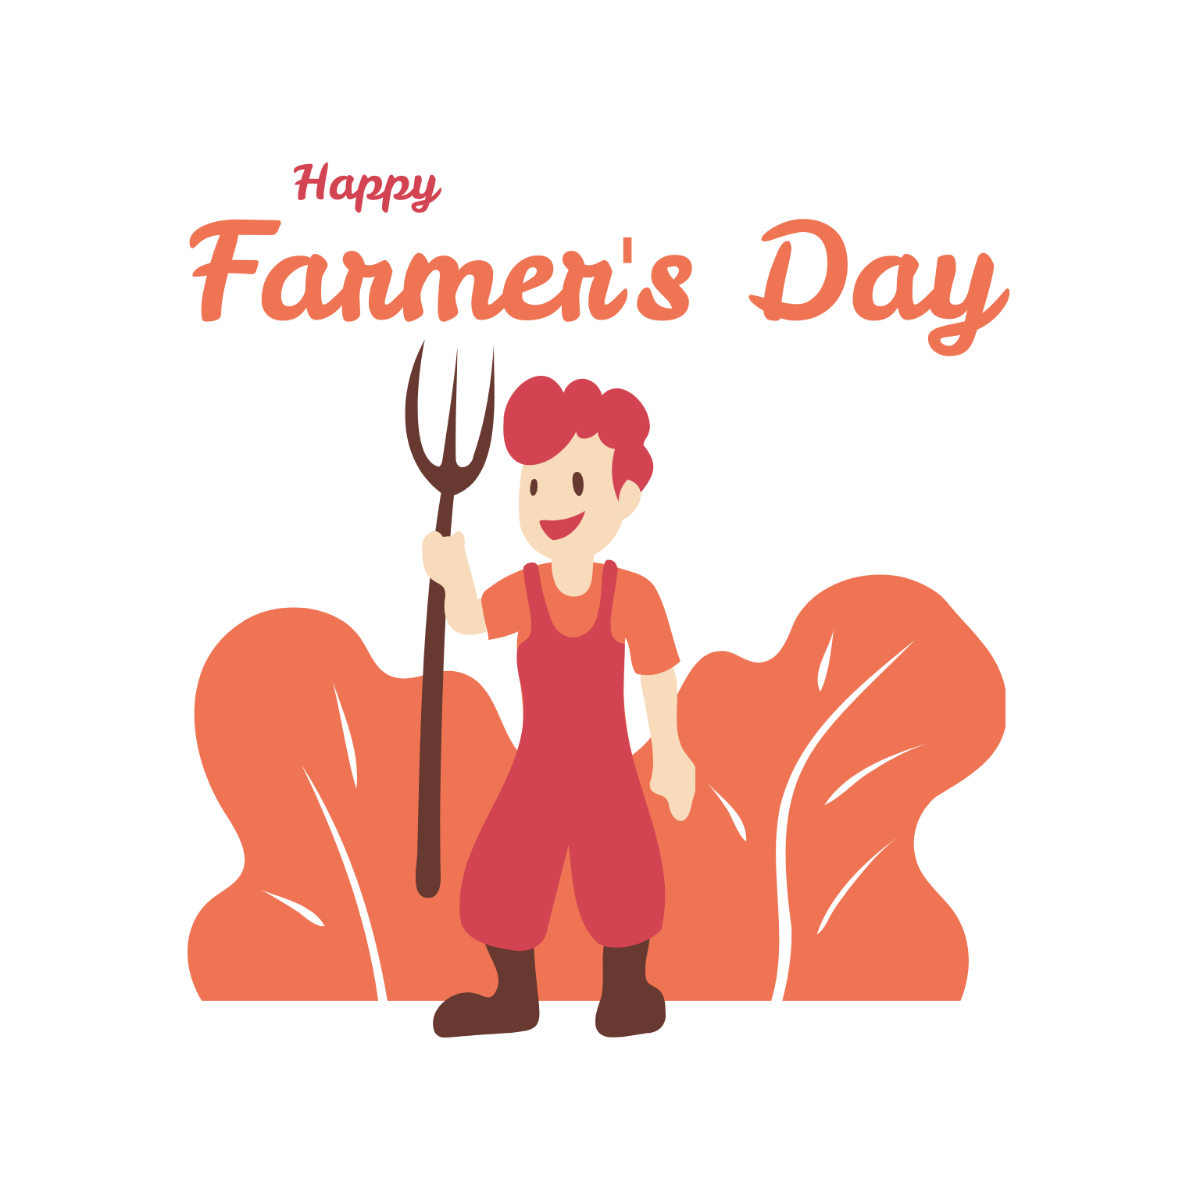 Happy Farmers Day Illustration